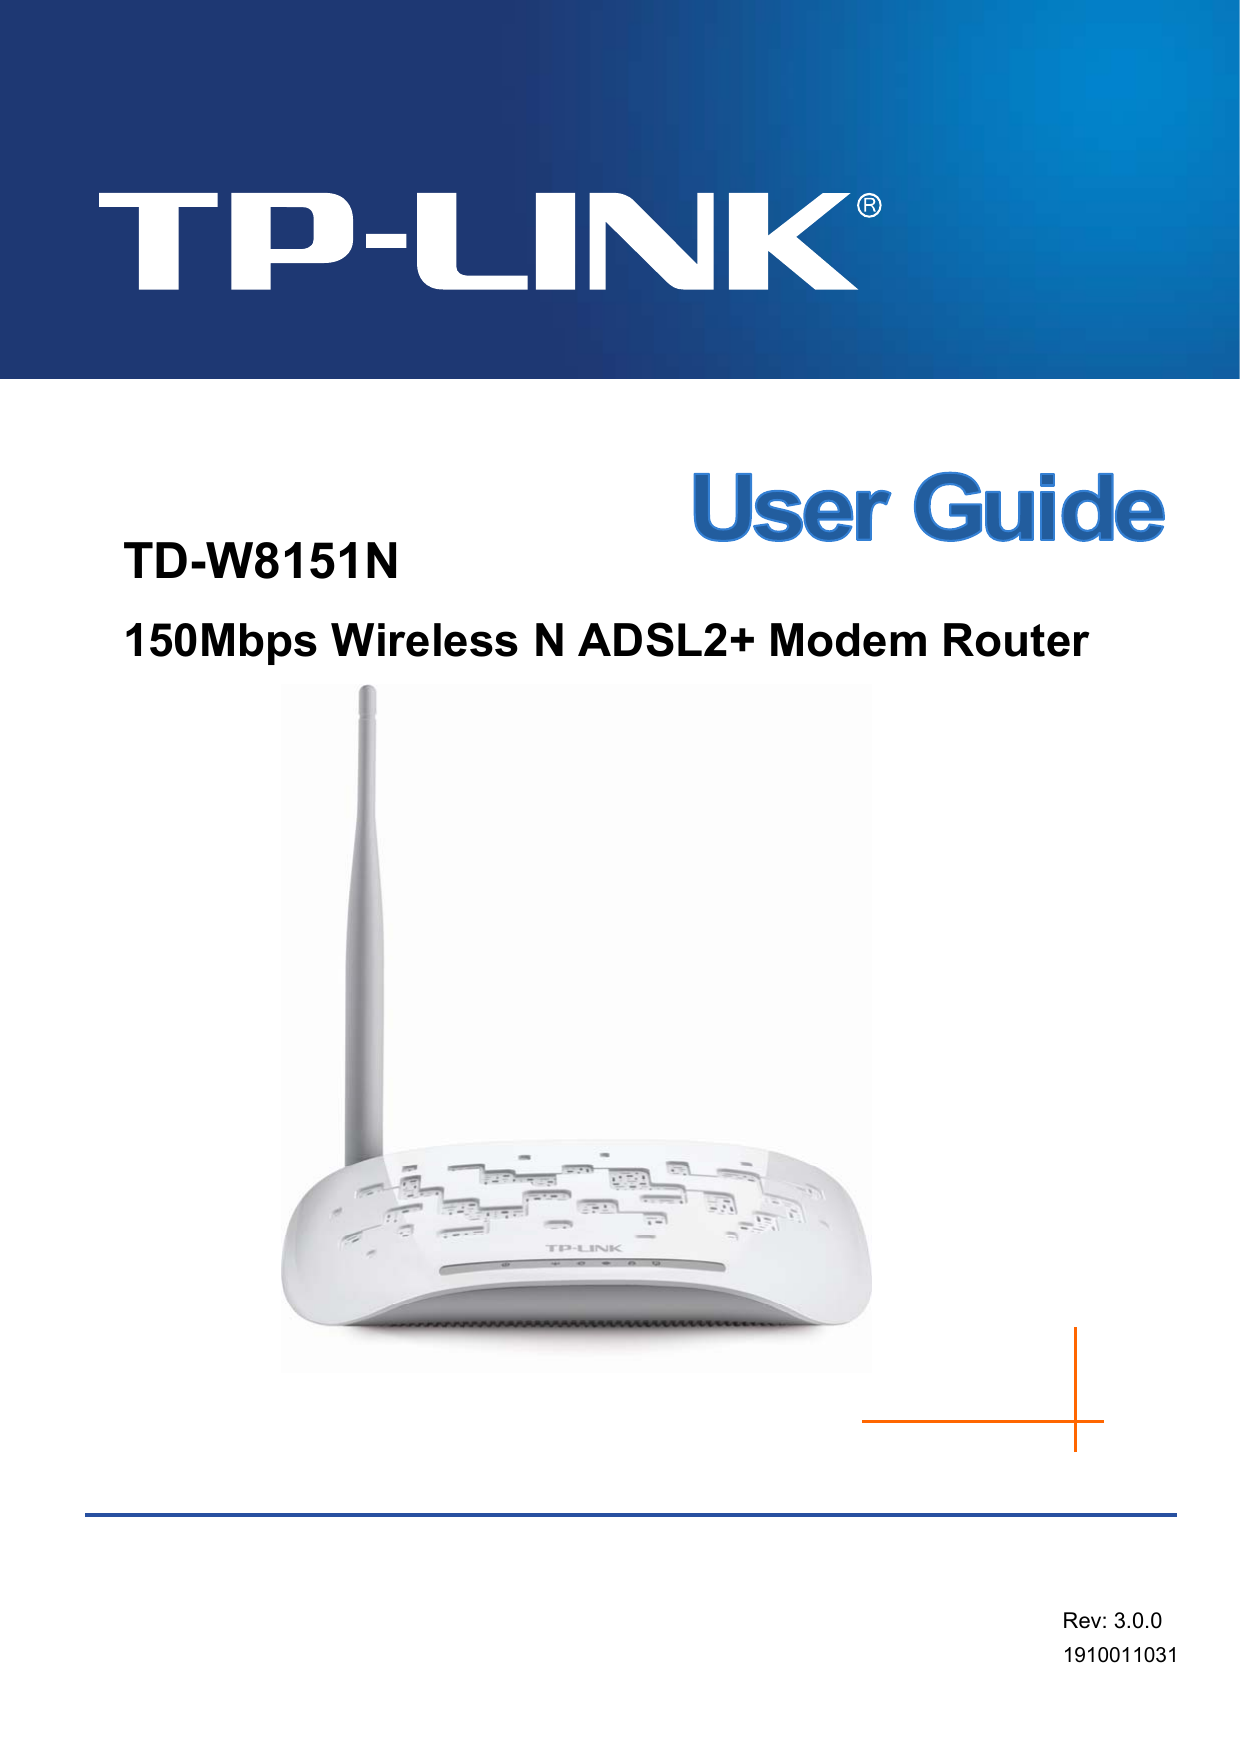     TD-W8151N 150Mbps Wireless N ADSL2+ Modem Router  Rev: 3.0.0 1910011031  